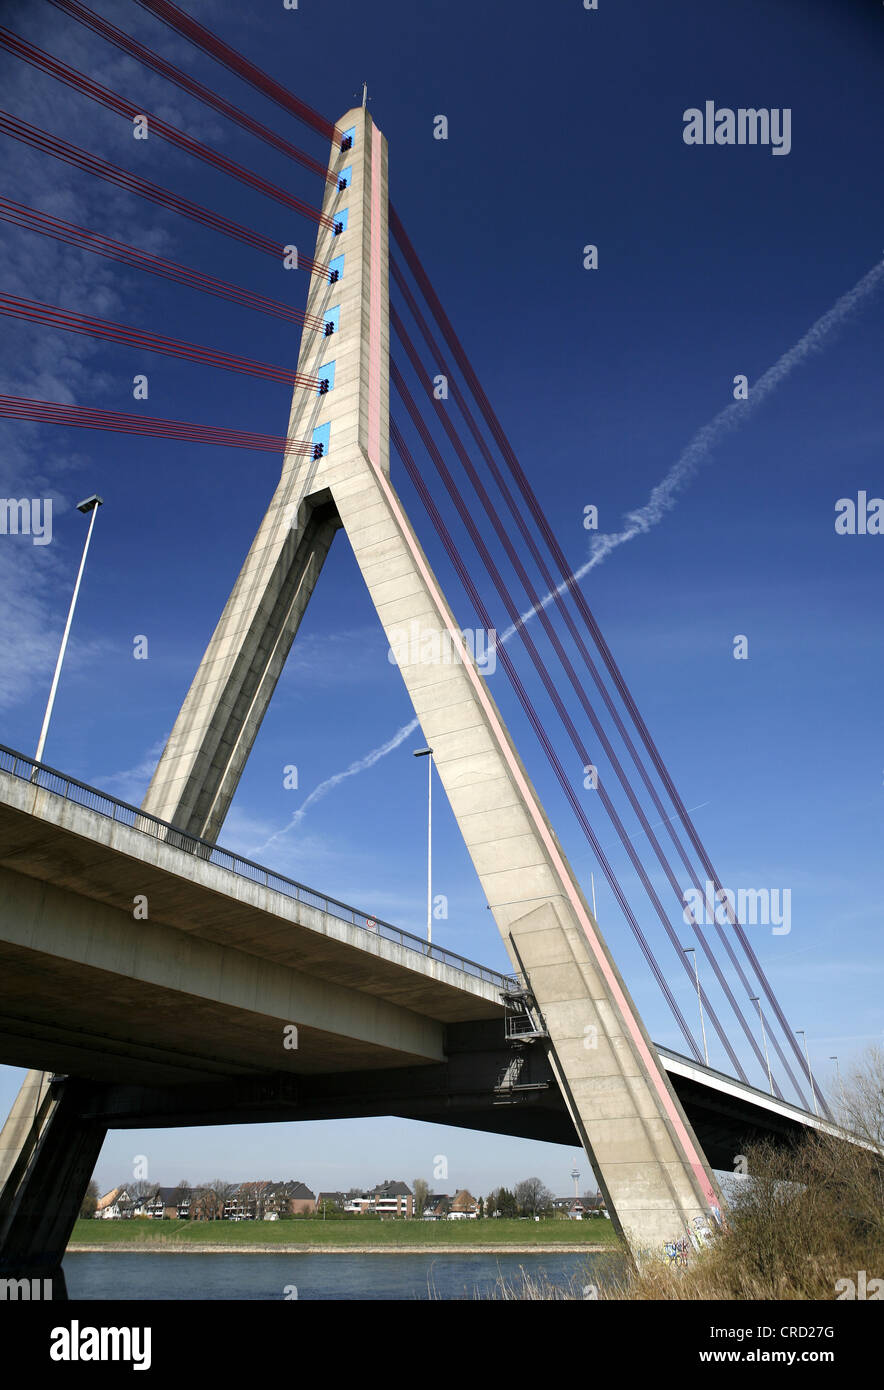 Pylon, Fleher Brücke, Brücke, A46 Autobahn, Düsseldorf - flehe, Düsseldorf, Nordrhein - Westfalen, Deutschland, Europa Stockfoto